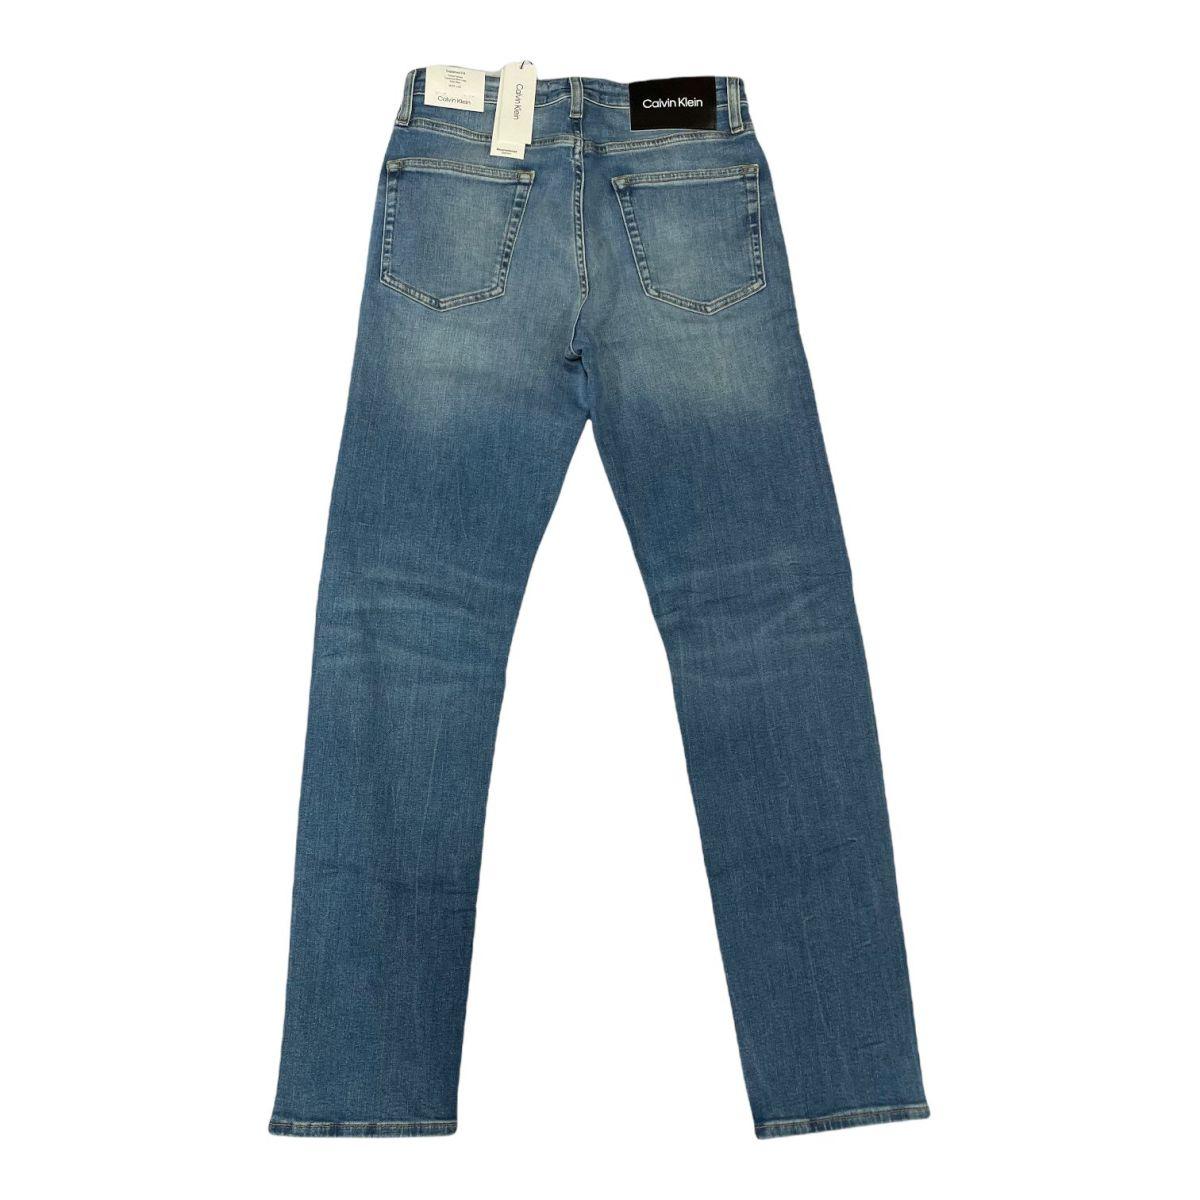 Jeans Uomo Ck 108131